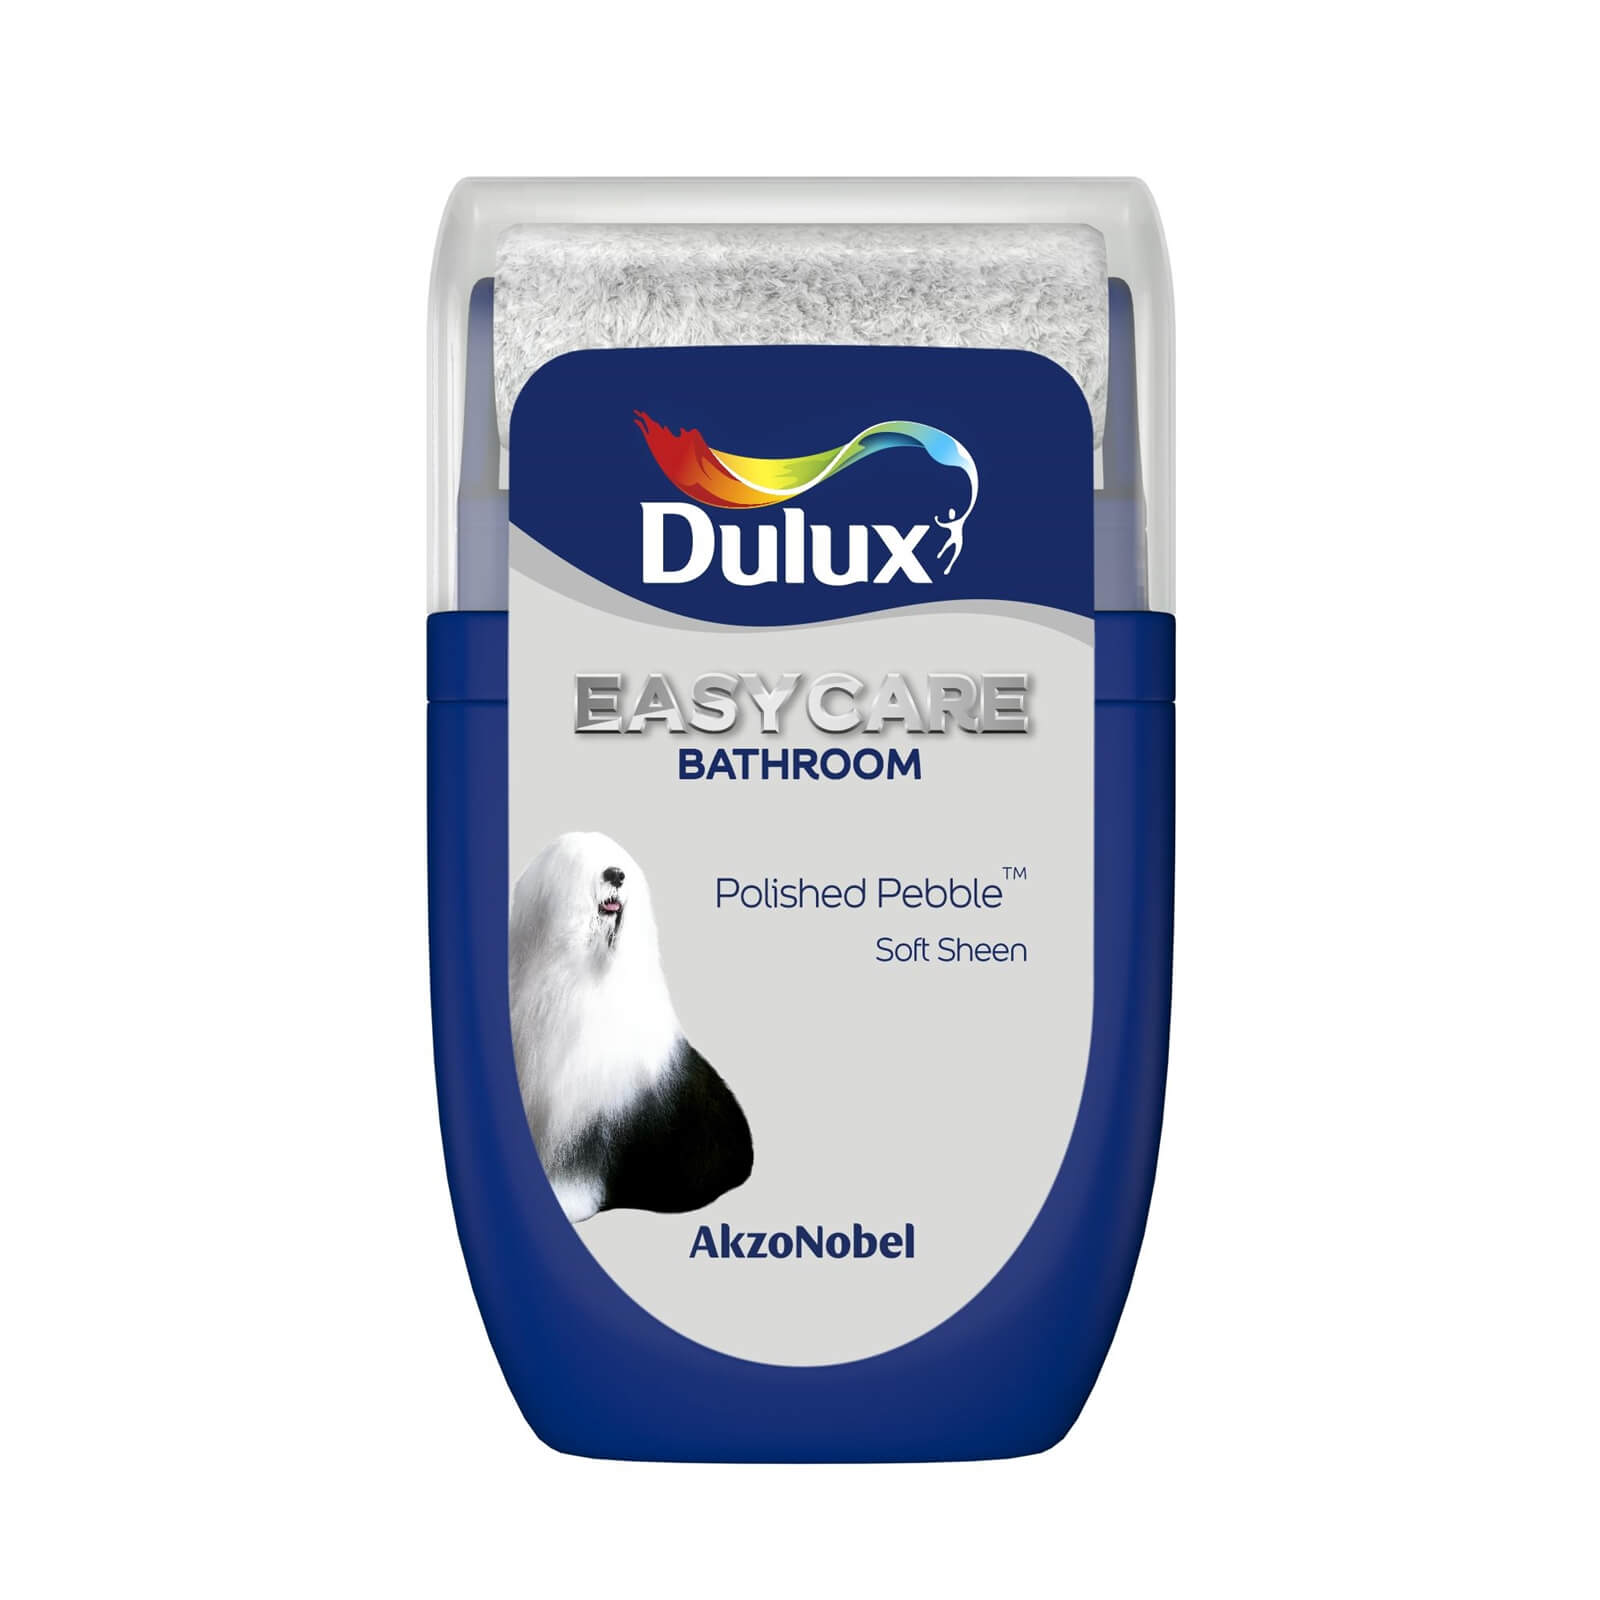 Dulux Easycare Bathroom Polished Pebble Tester Paint - 30ml